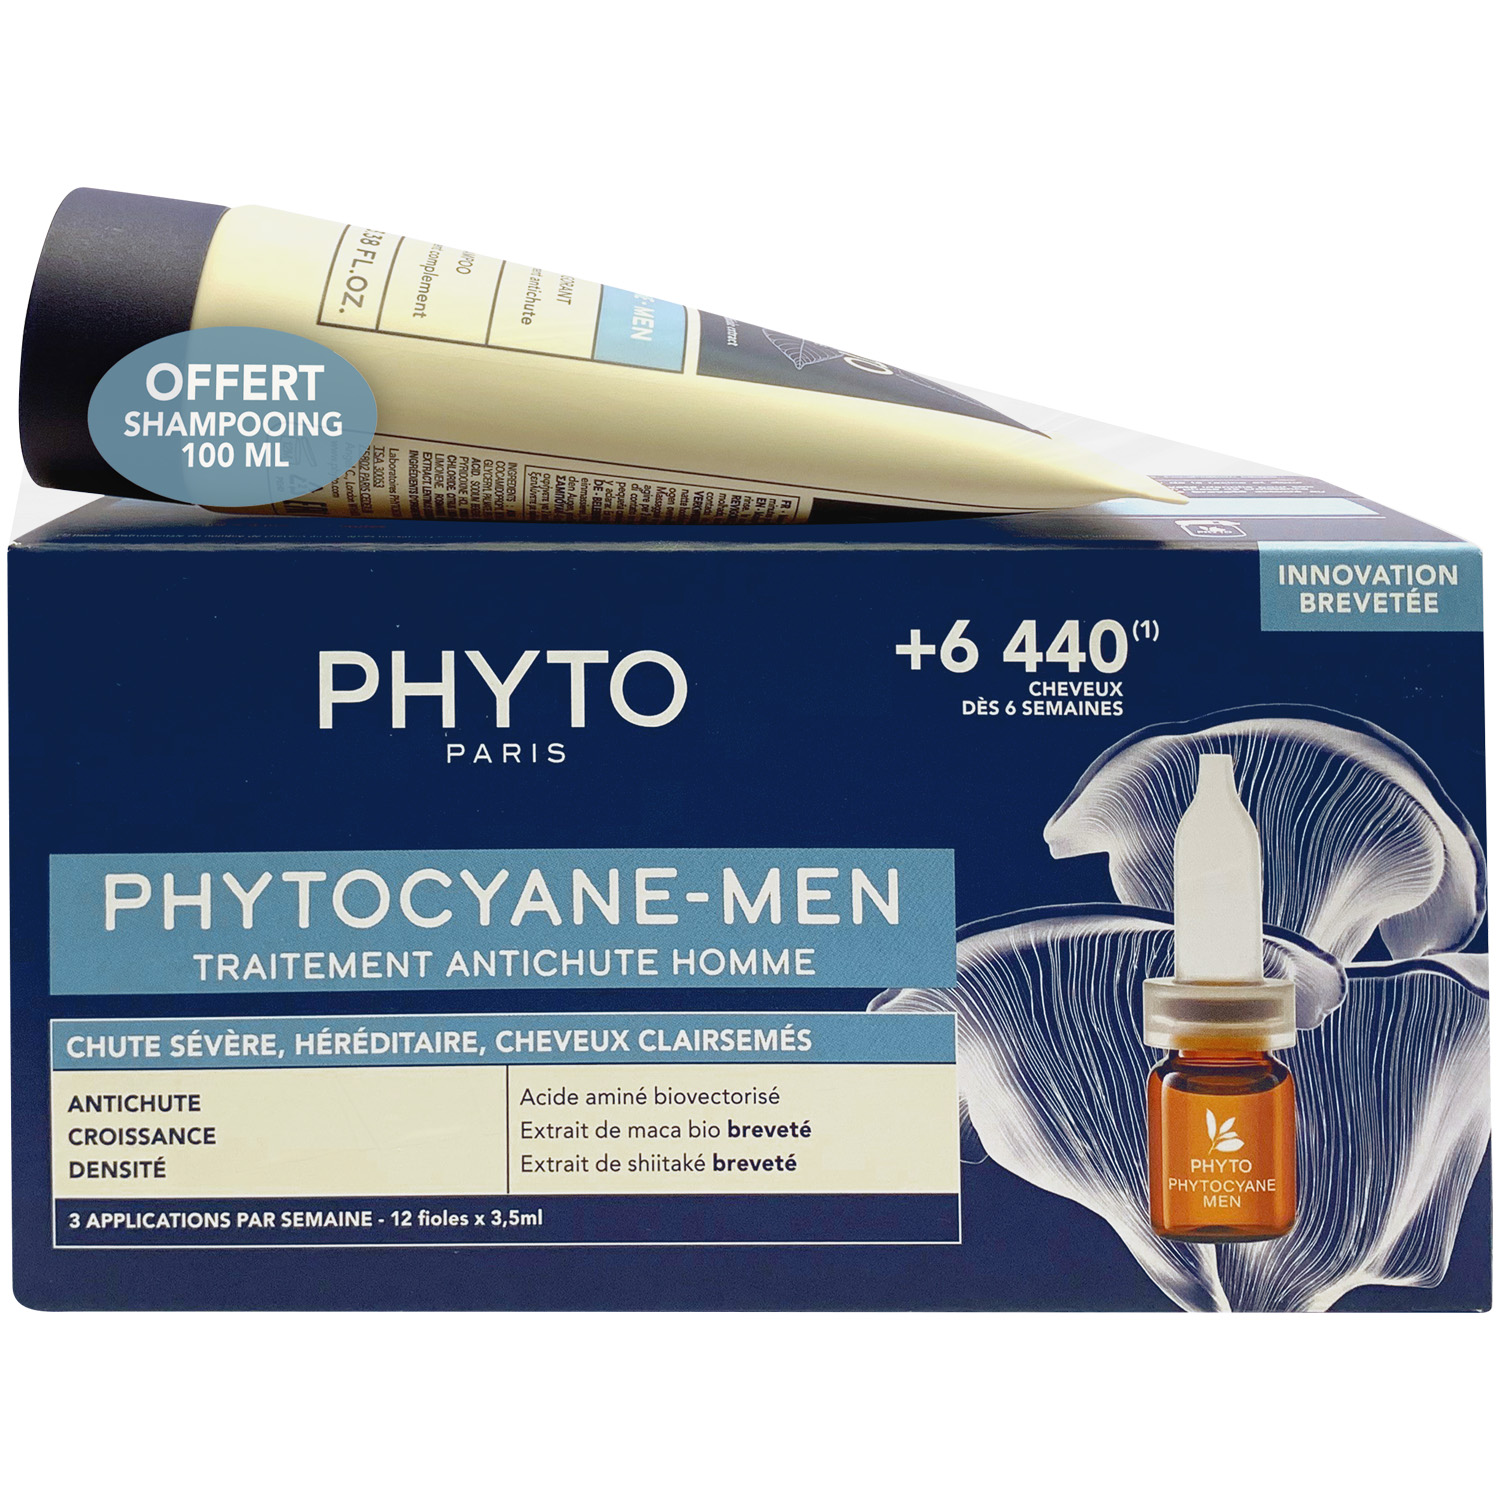 Phyto Набор для мужчин: сыворотка от выпадения волос 12х3,5 мл + шампунь 100 мл (Phyto, Phytocyane) phyto фитоциан мэн сыворотка против выпадения волос у мужчин 3 5мл х 12 флаконов